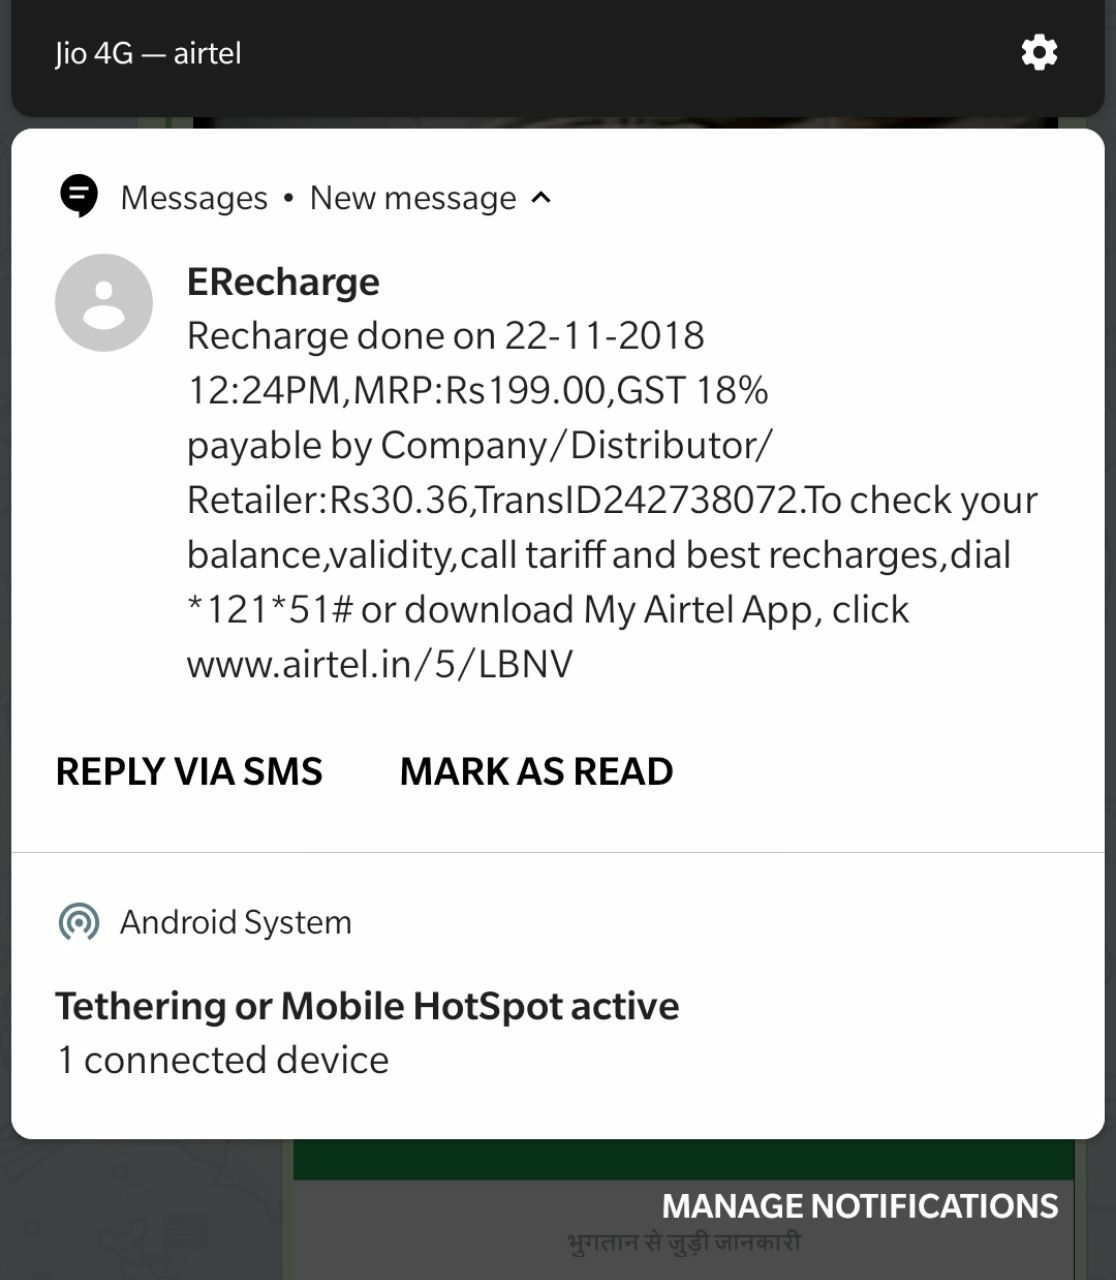 (Bada Loot) Sooper App -Get Unlimited Free Mobile Recharge(Rs.25/Refer)